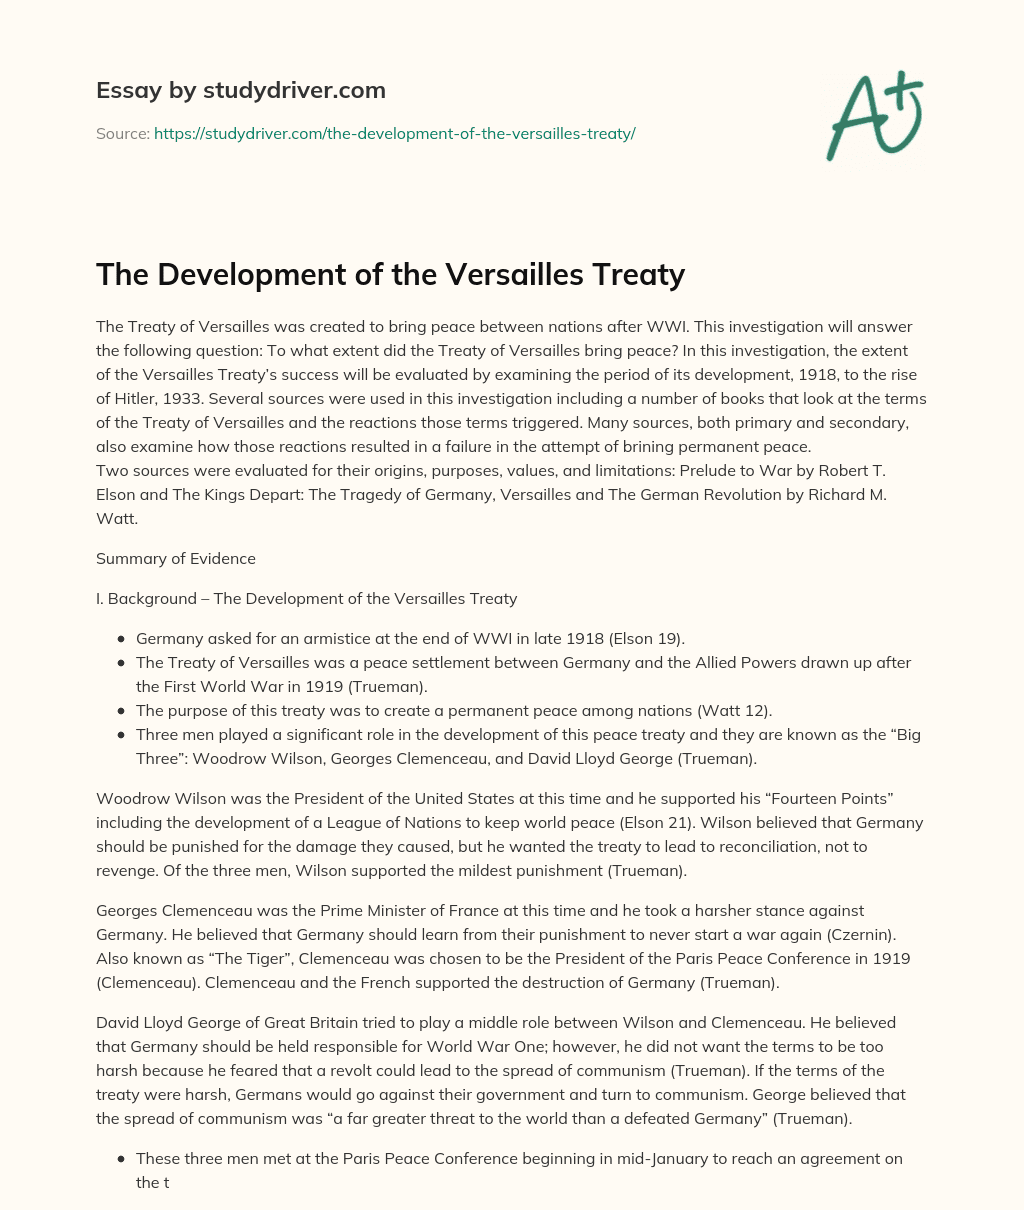 The Development of the Versailles Treaty essay